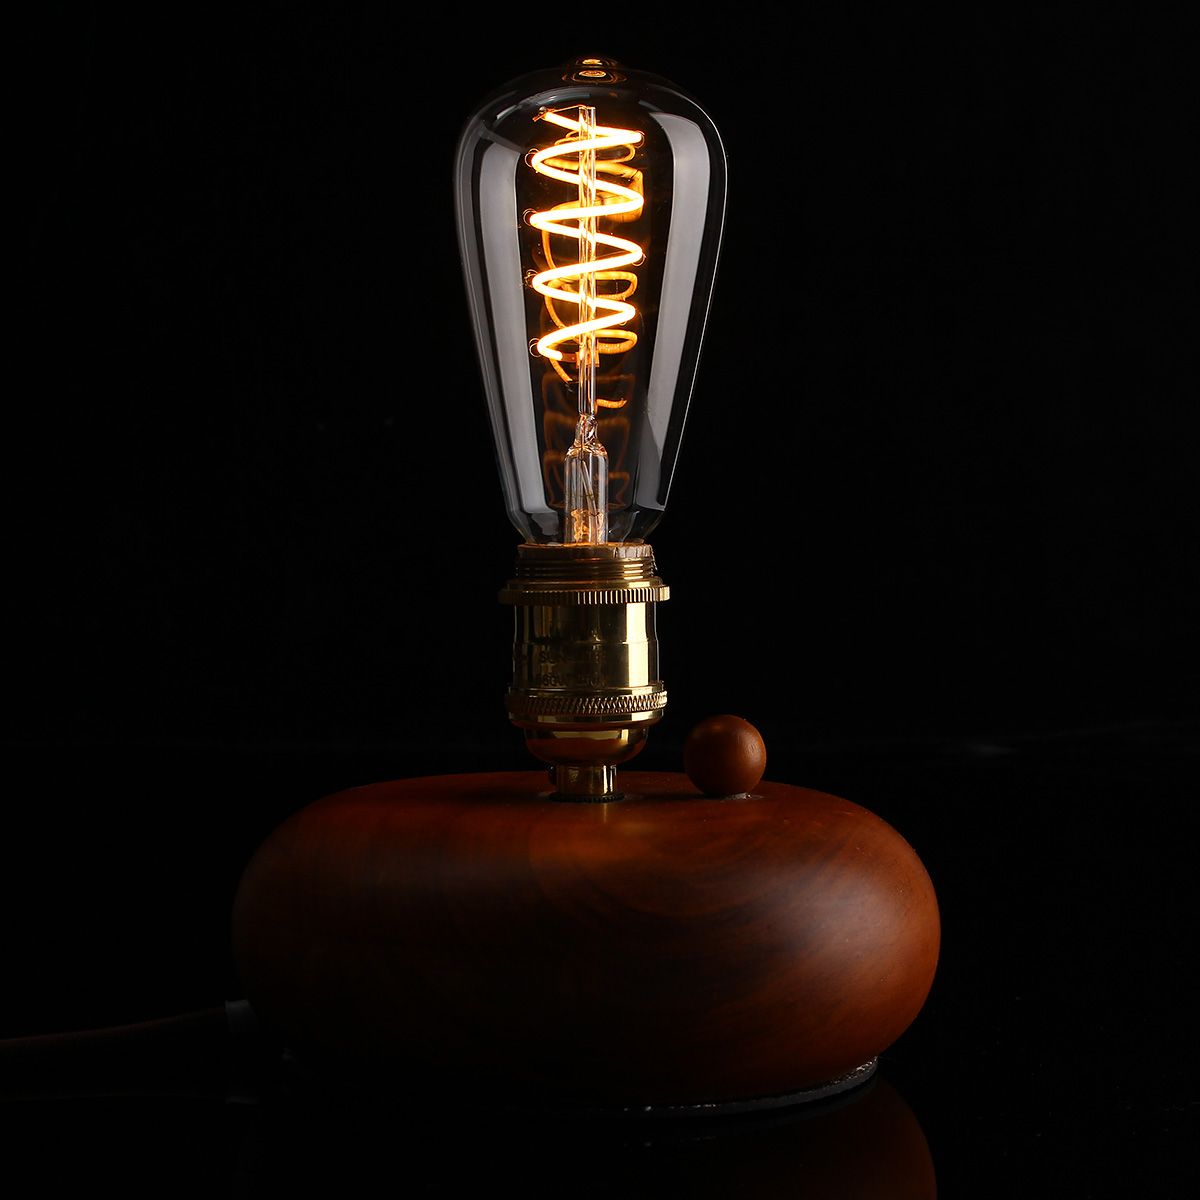 E27-Dimmable-COB-LED-Vintage-Retro-Industrial-Edison-Lamp-Indoor-Lighting-Filament-Light-Bulb-AC110V-1116000